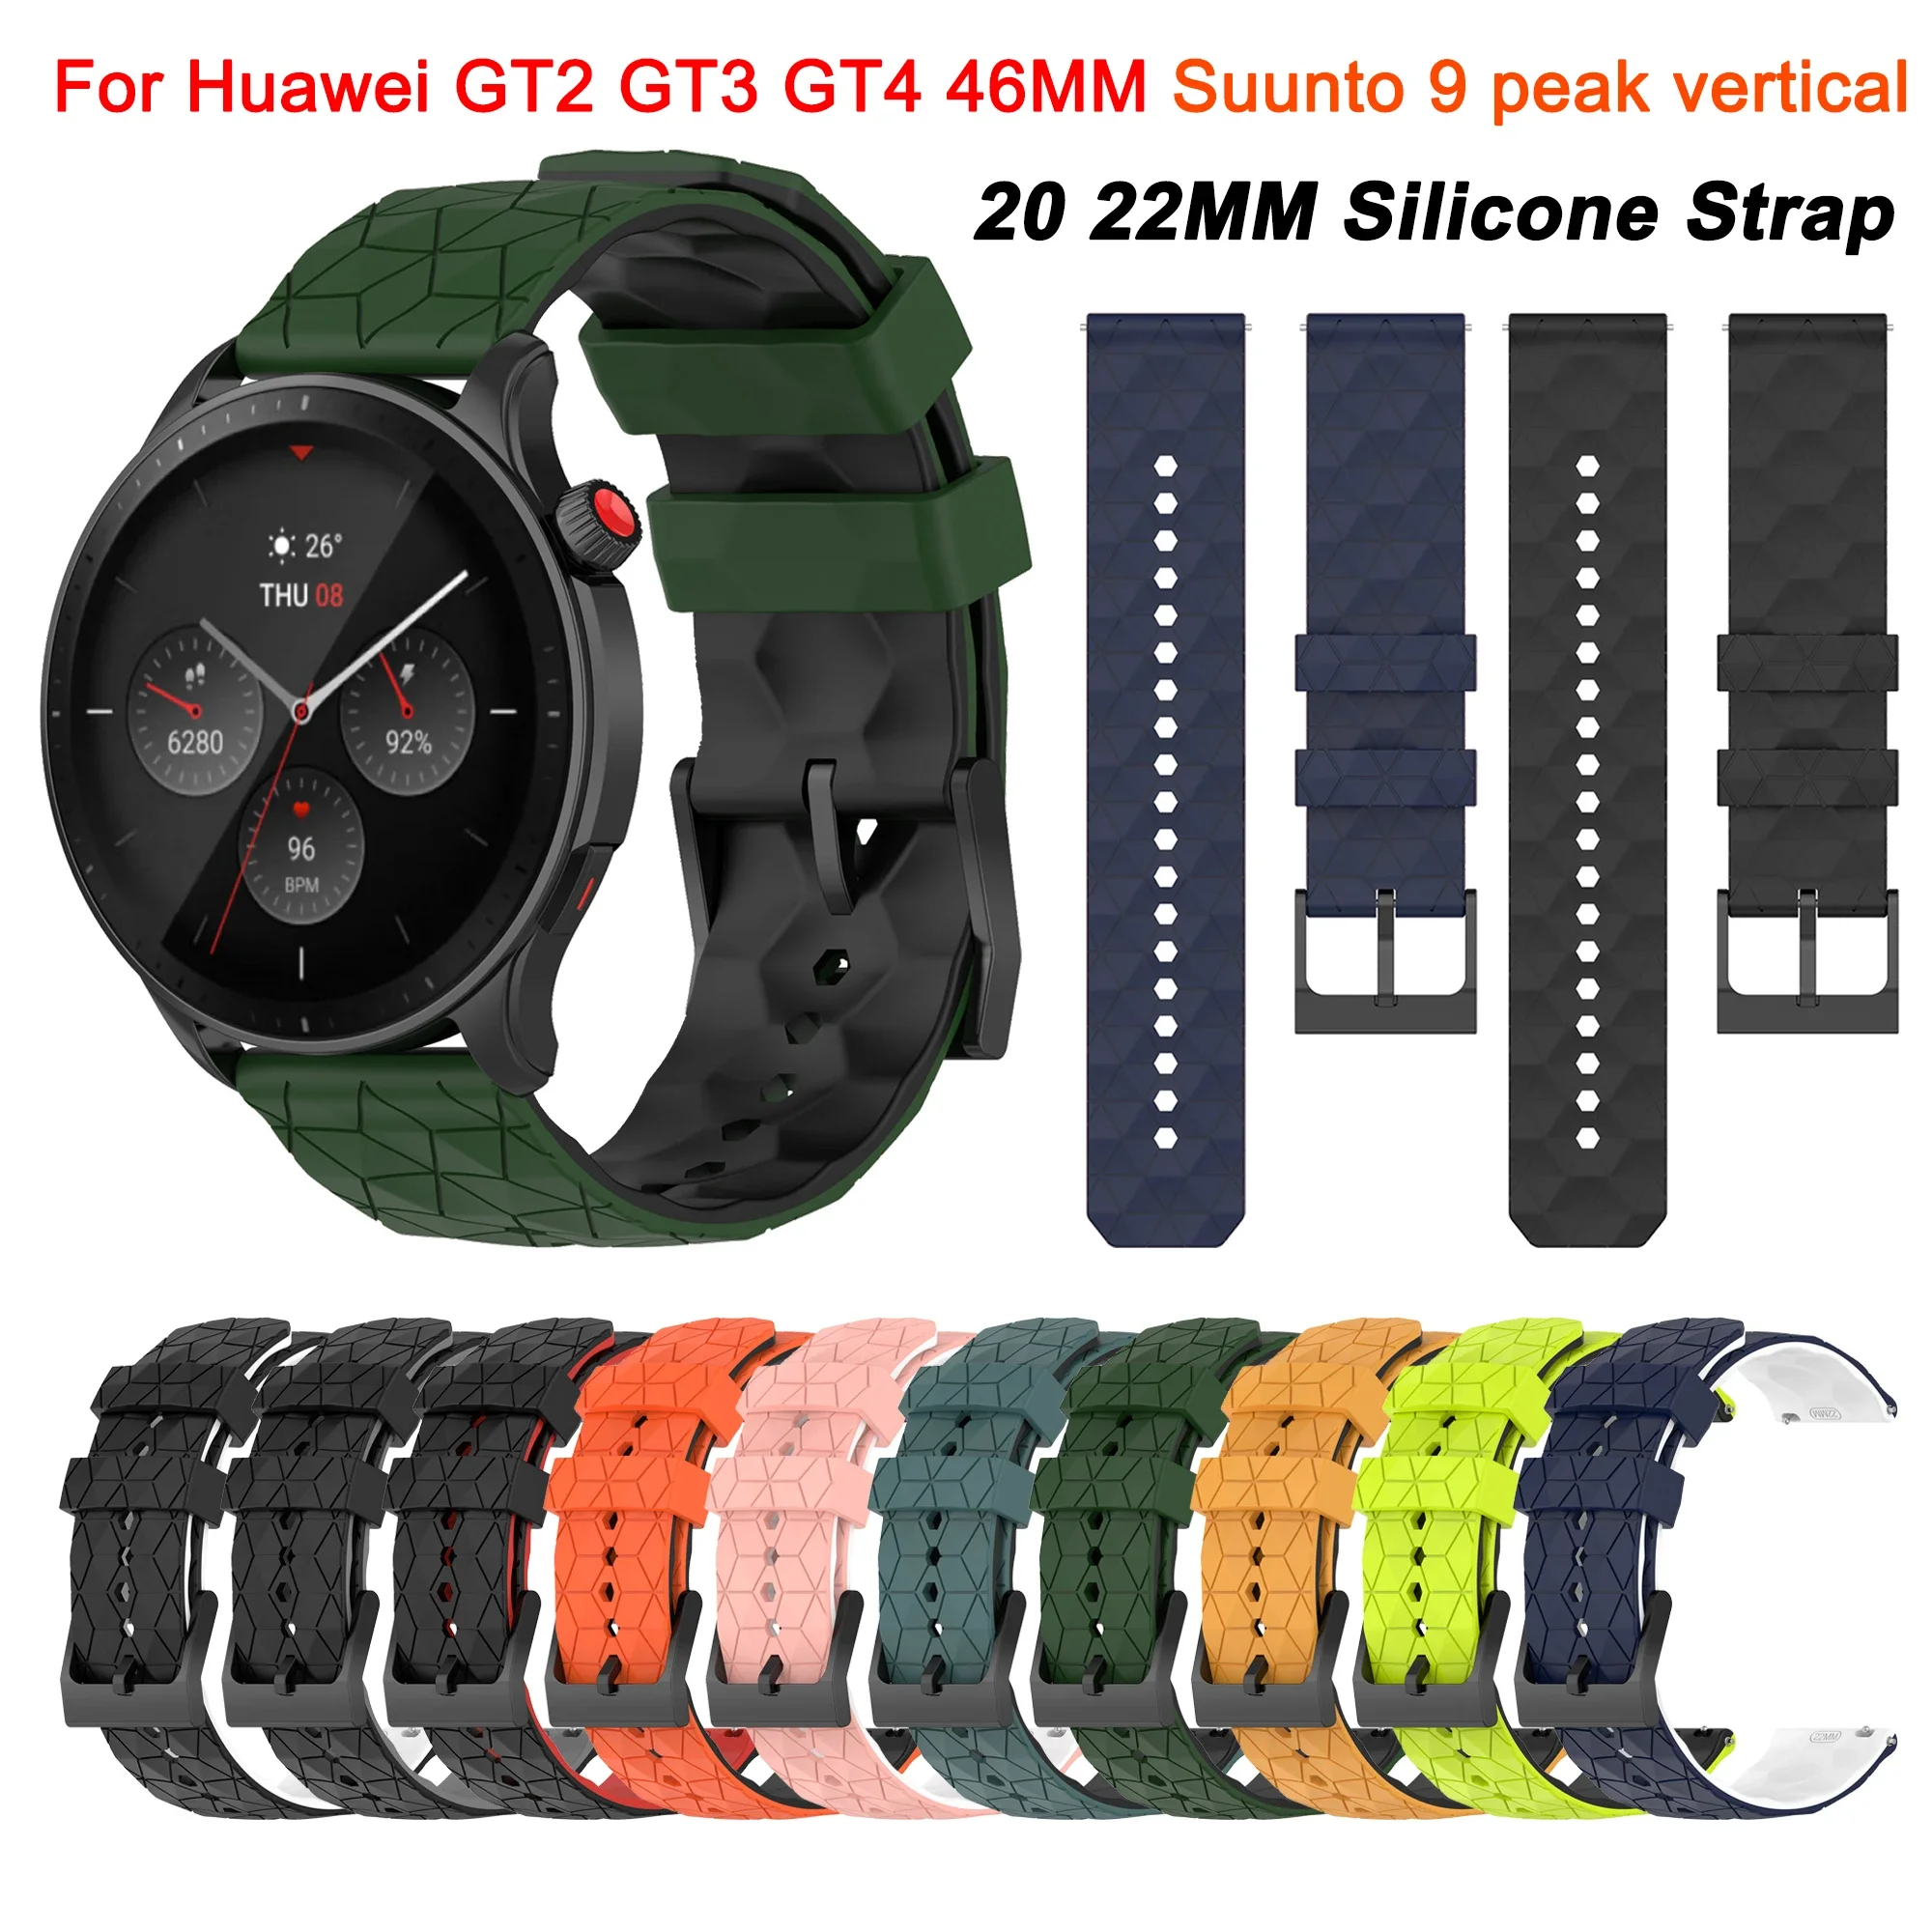 

20mm/22mm watch band For Amazfit GTR GTS/2/3/4 Huawei GT2 GT3 GT4 46mm SUUNTO 9 PEAK PRO Vertical Silicone Bracelet Watch strap